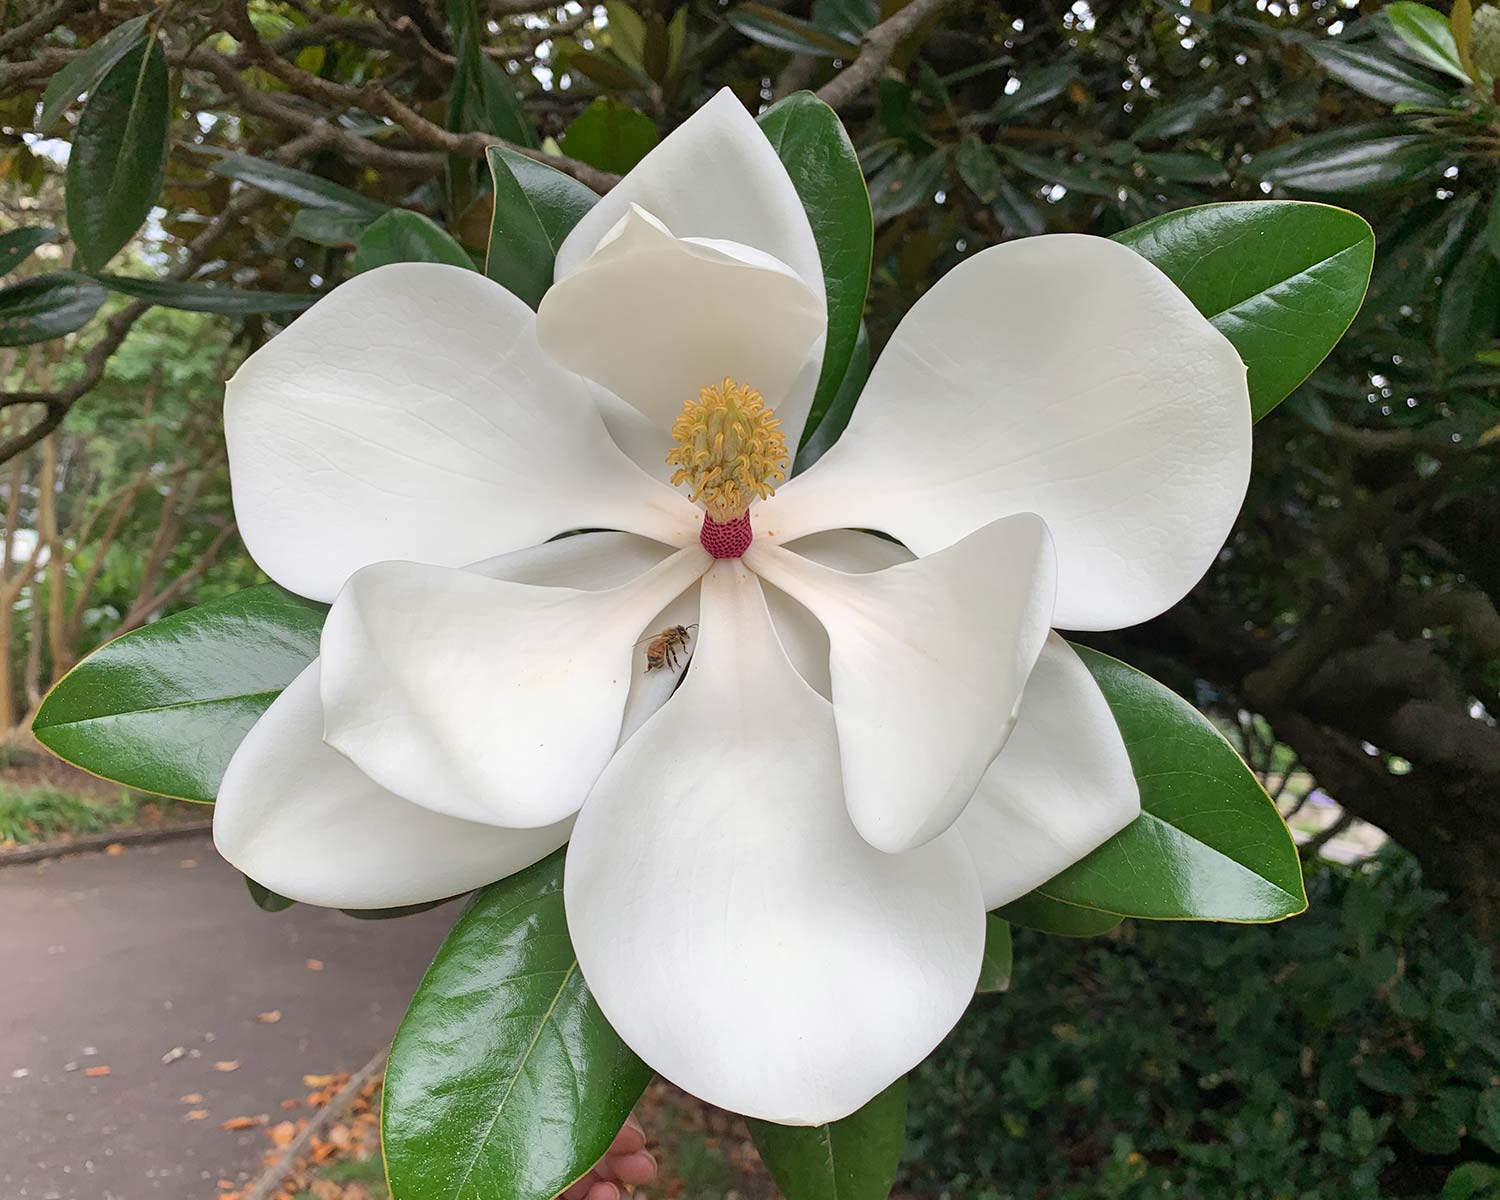 Magnolia grandiflora - huge saucer shaped cream flowers